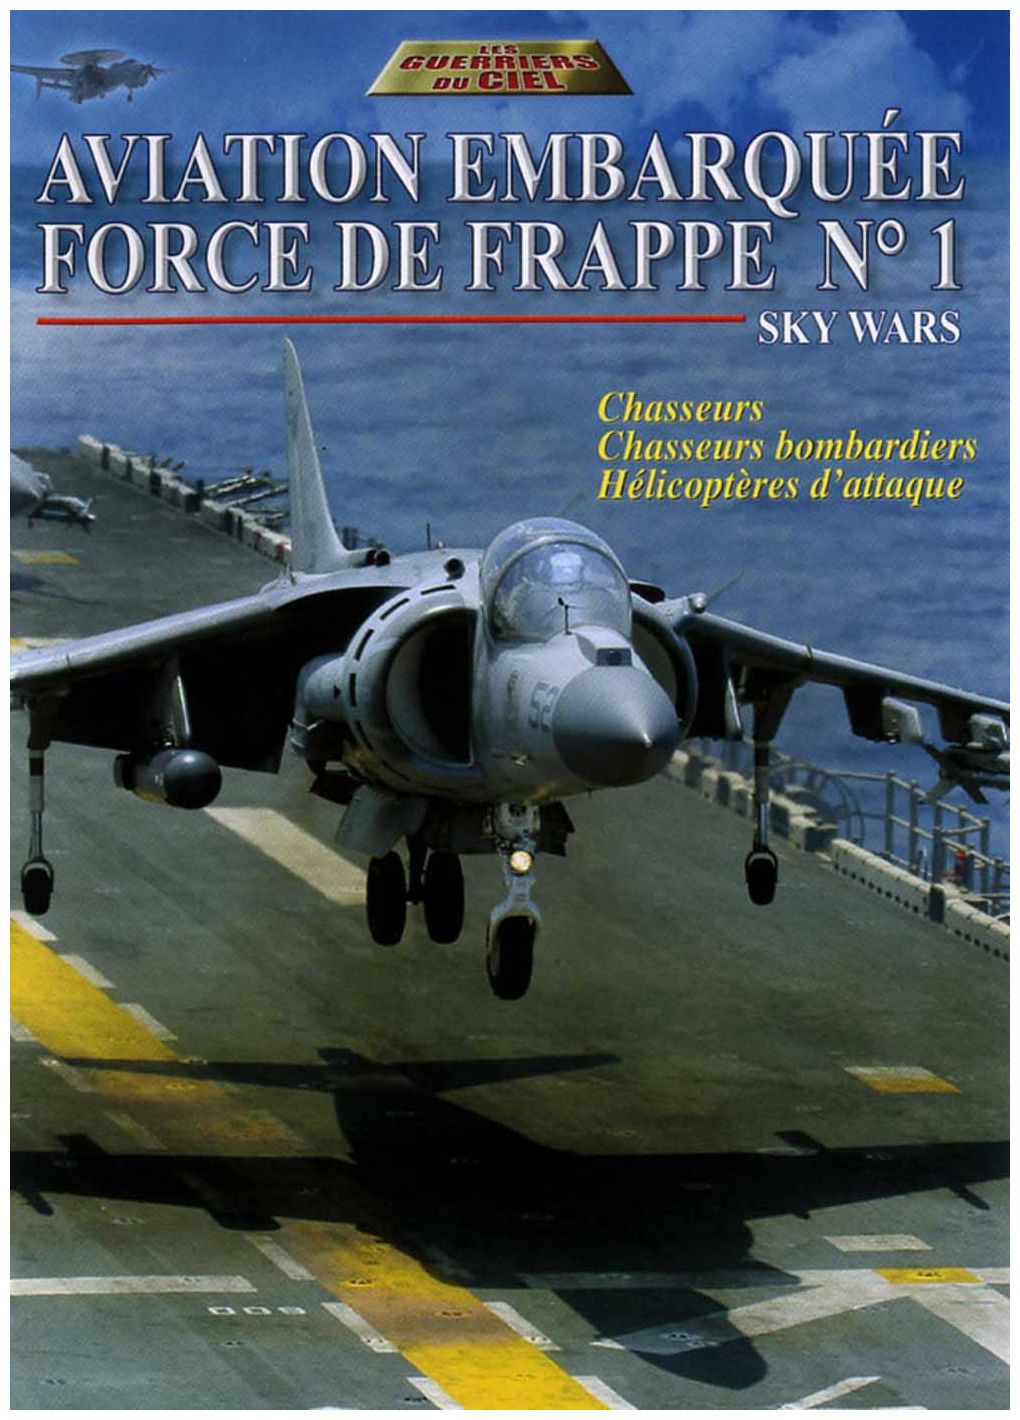 Aviation Embarquée Force De Frappe, Vol. 1 [DVD]